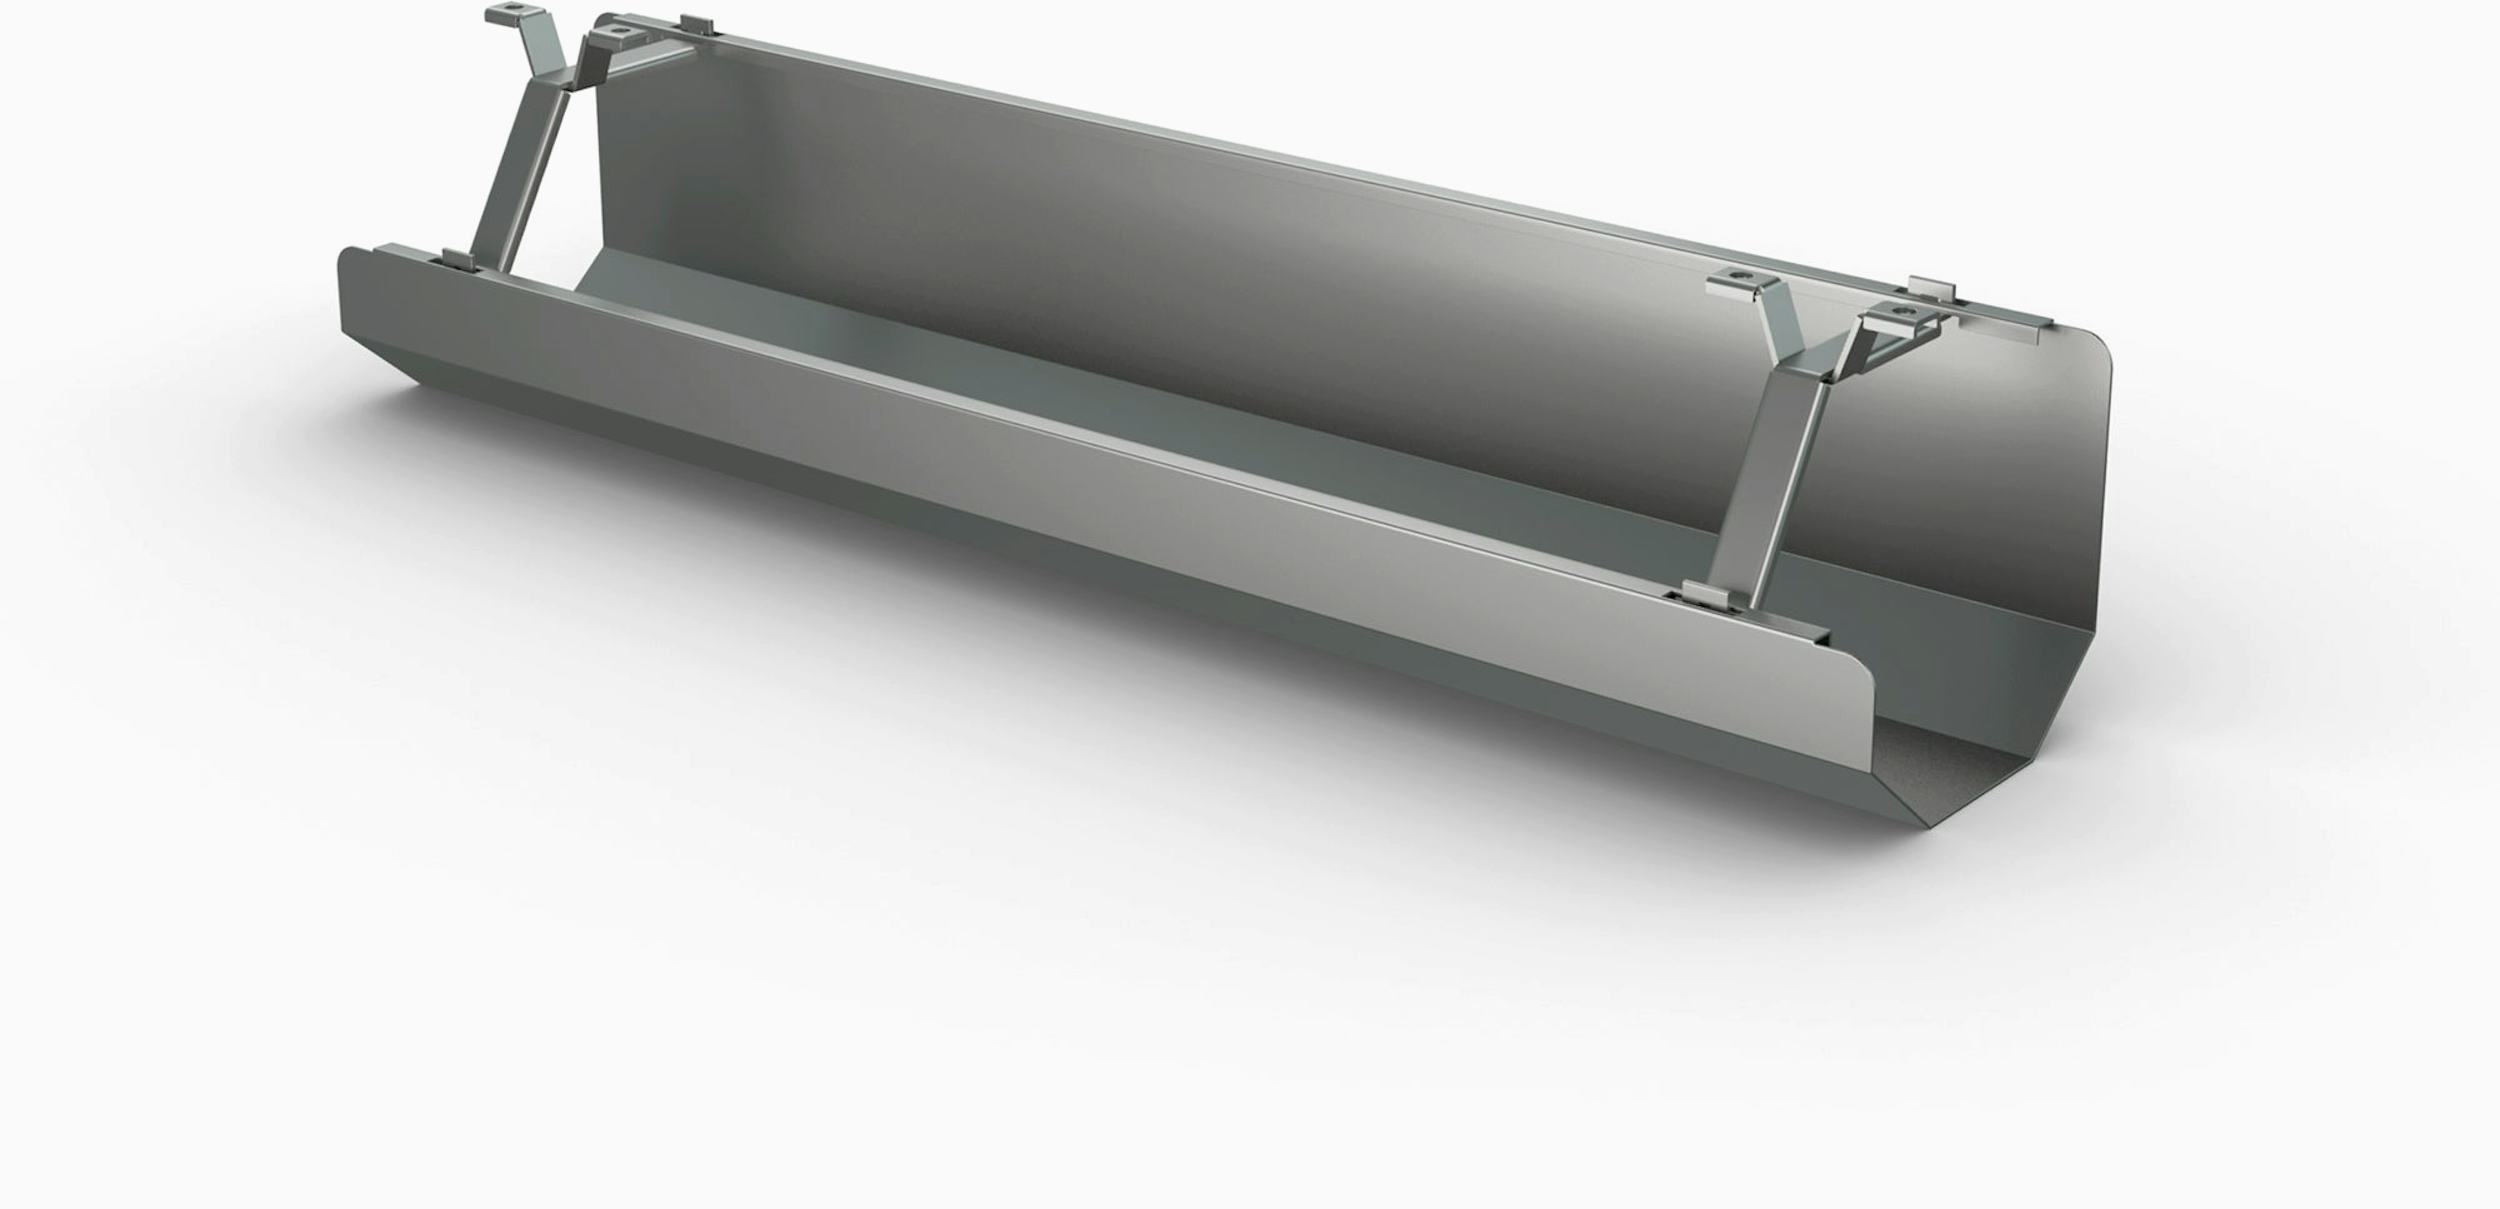 Sellars 24-inch by 48-inch Utility Tray